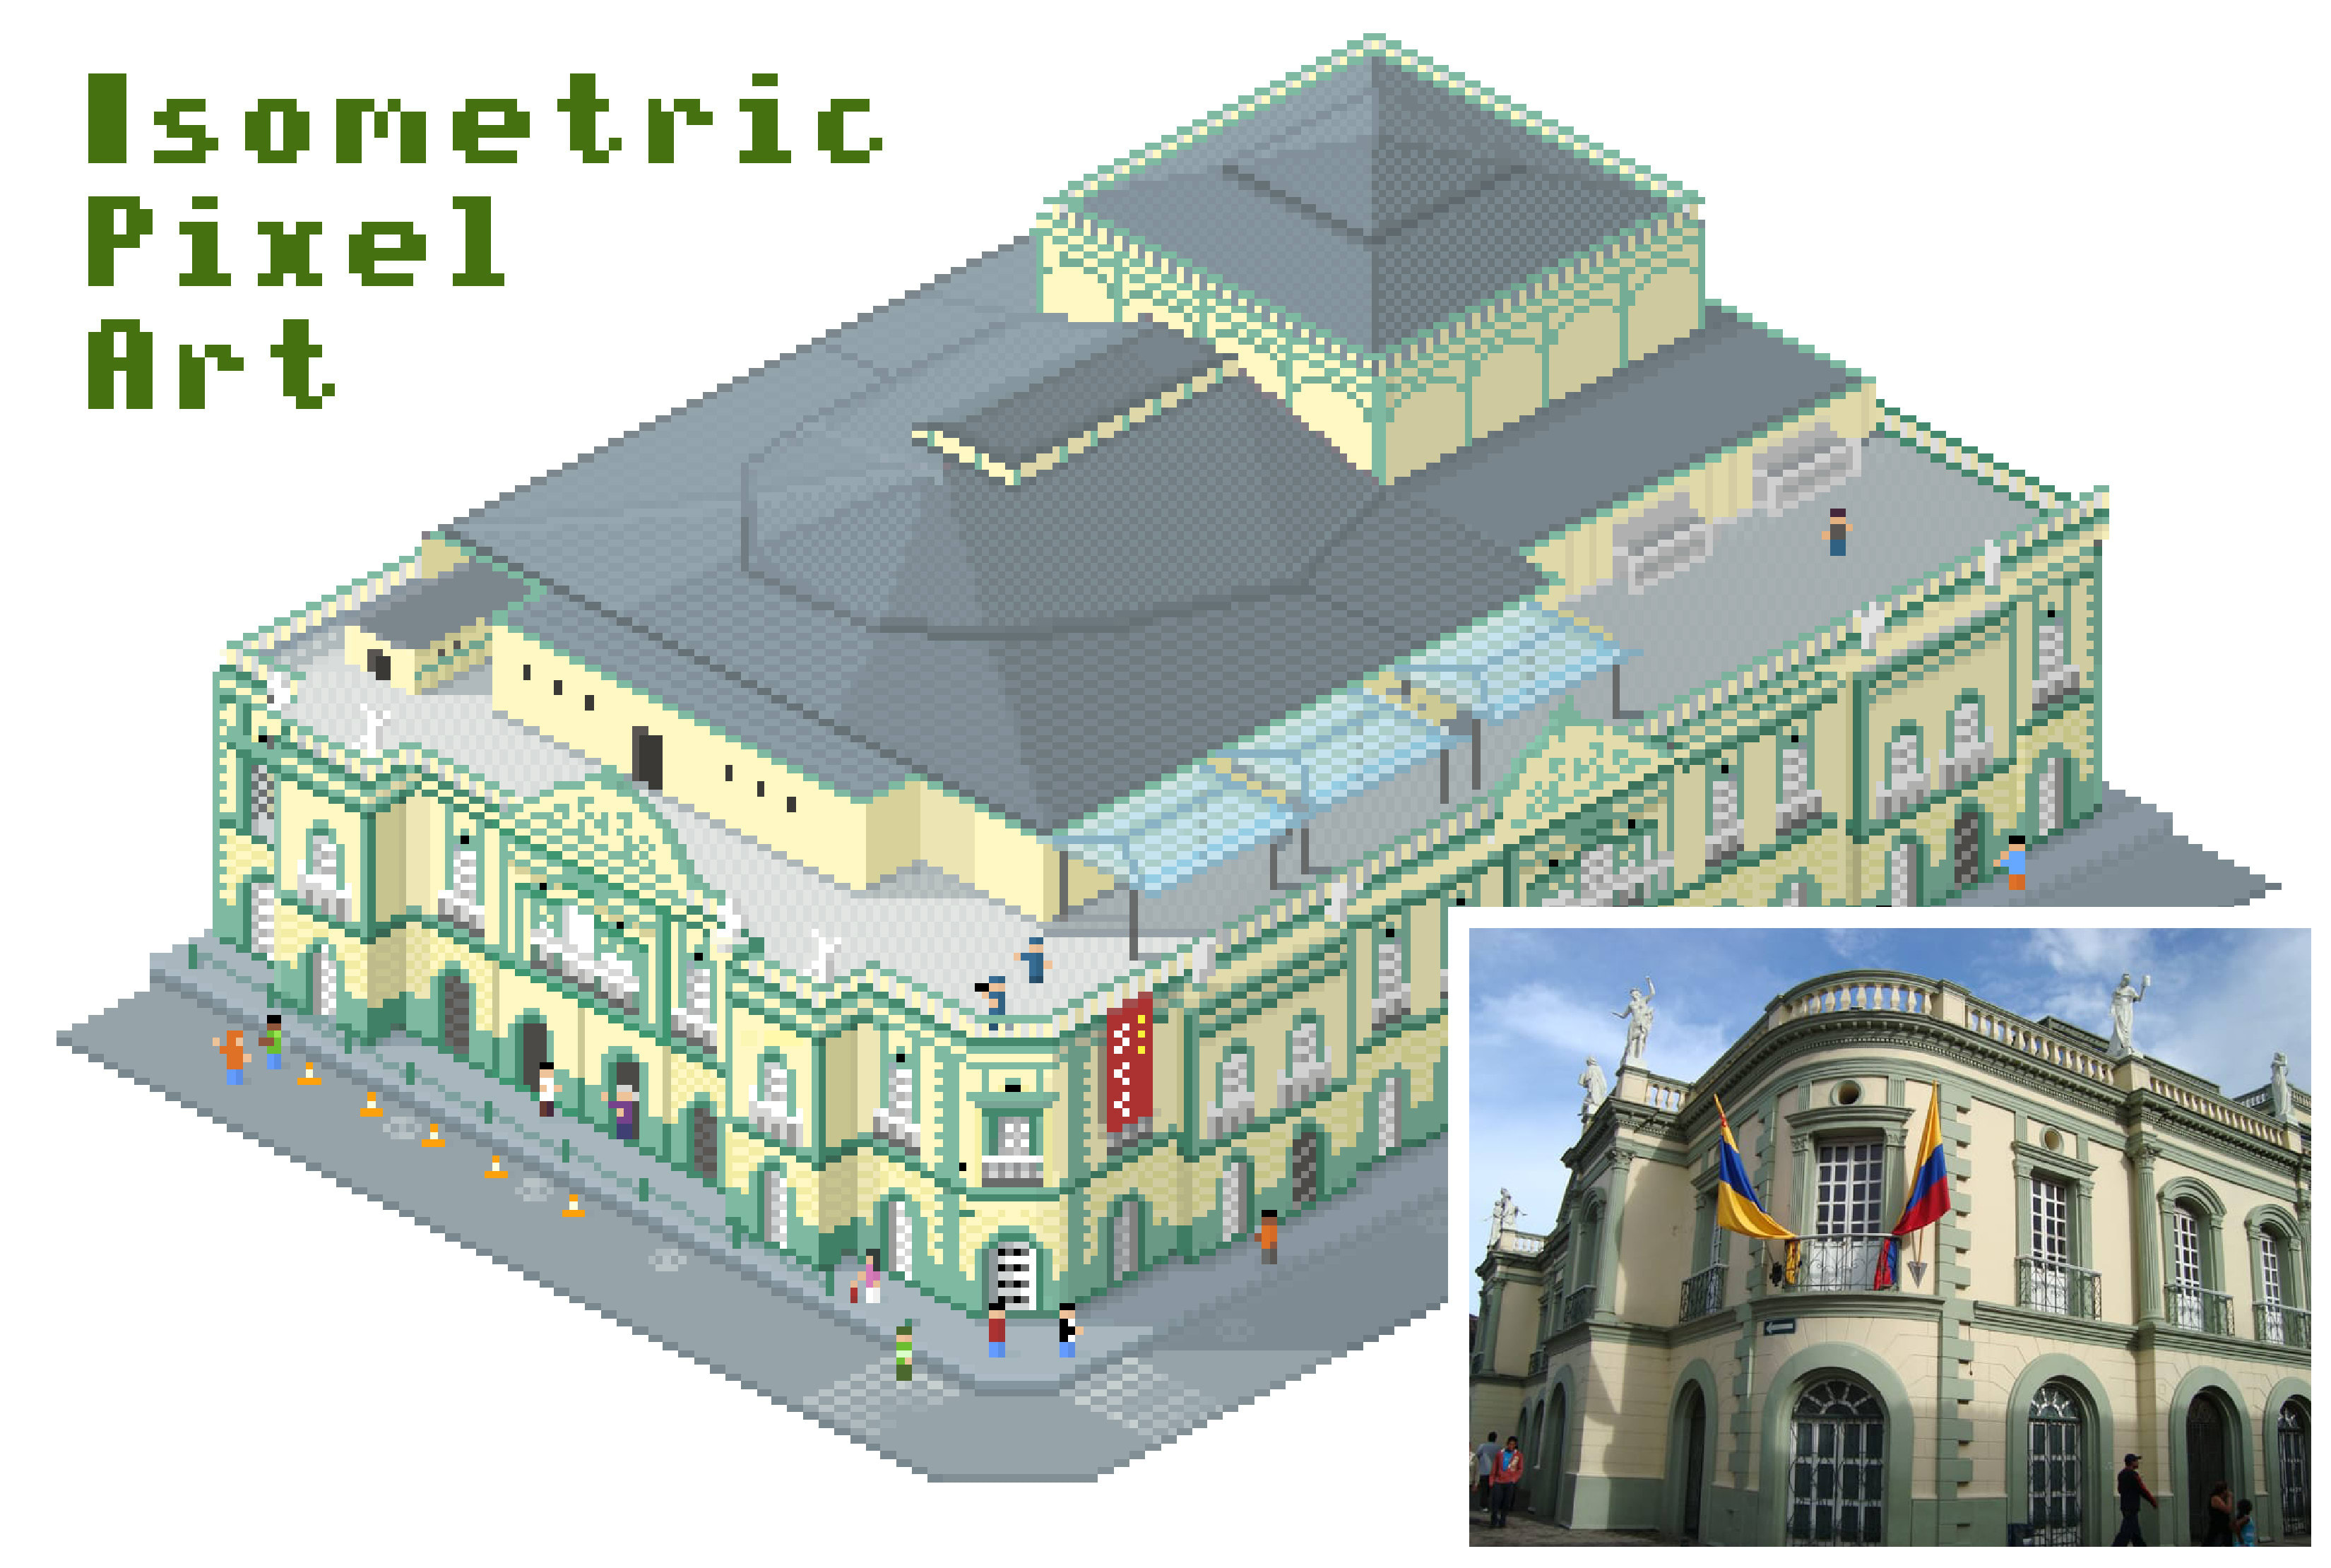 Create an Isometric Pixel Art House in Adobe Photoshop